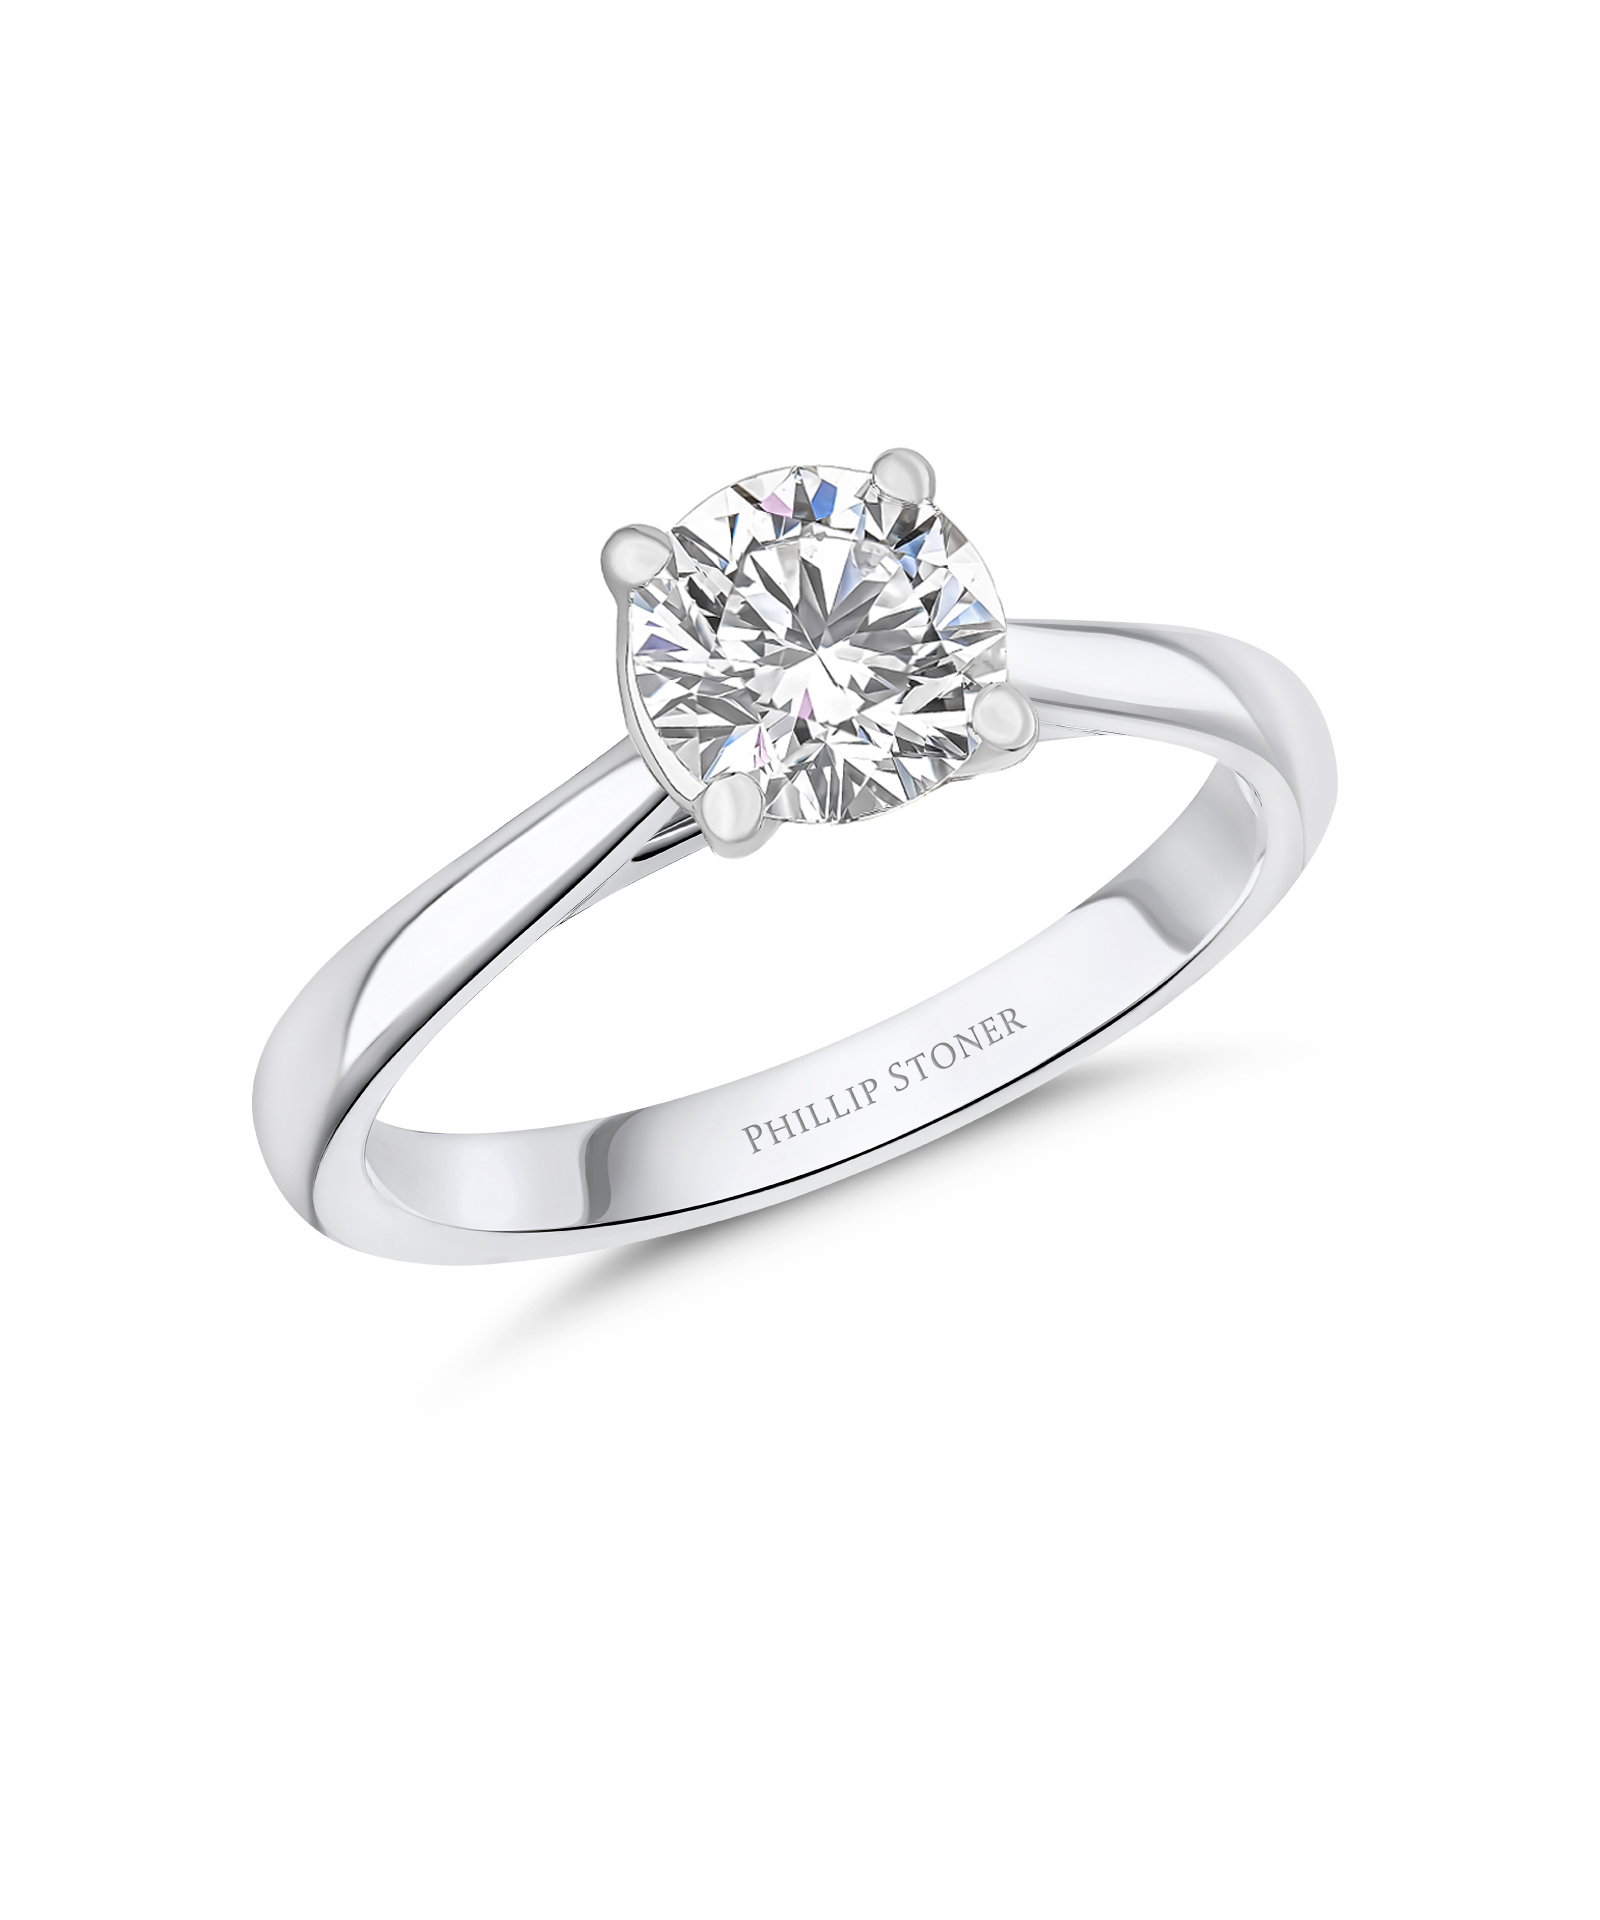 1ct Round Brilliant Cut Diamond Single Stone Engagement Ring - Phillip Stoner The Jeweller